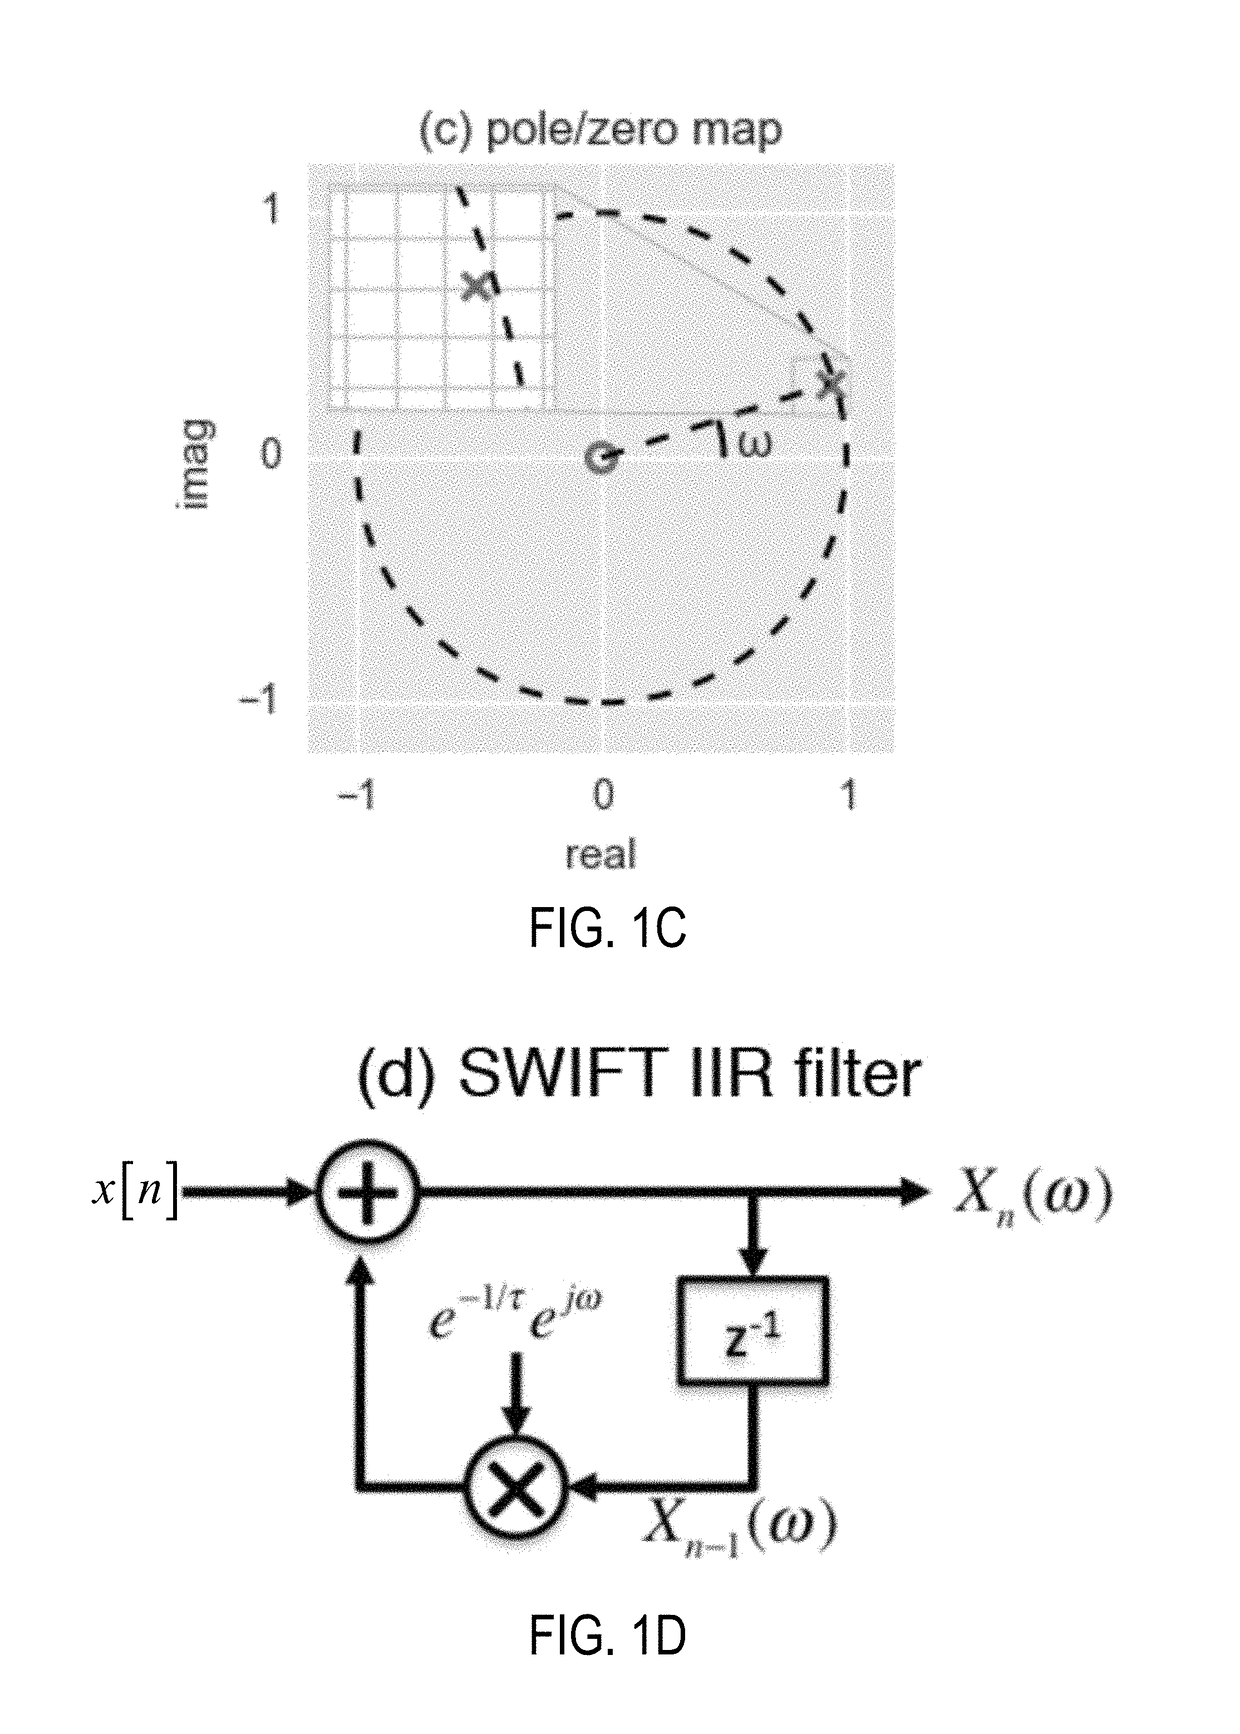 Digital signal processing using sliding windowed infinite fourier transform